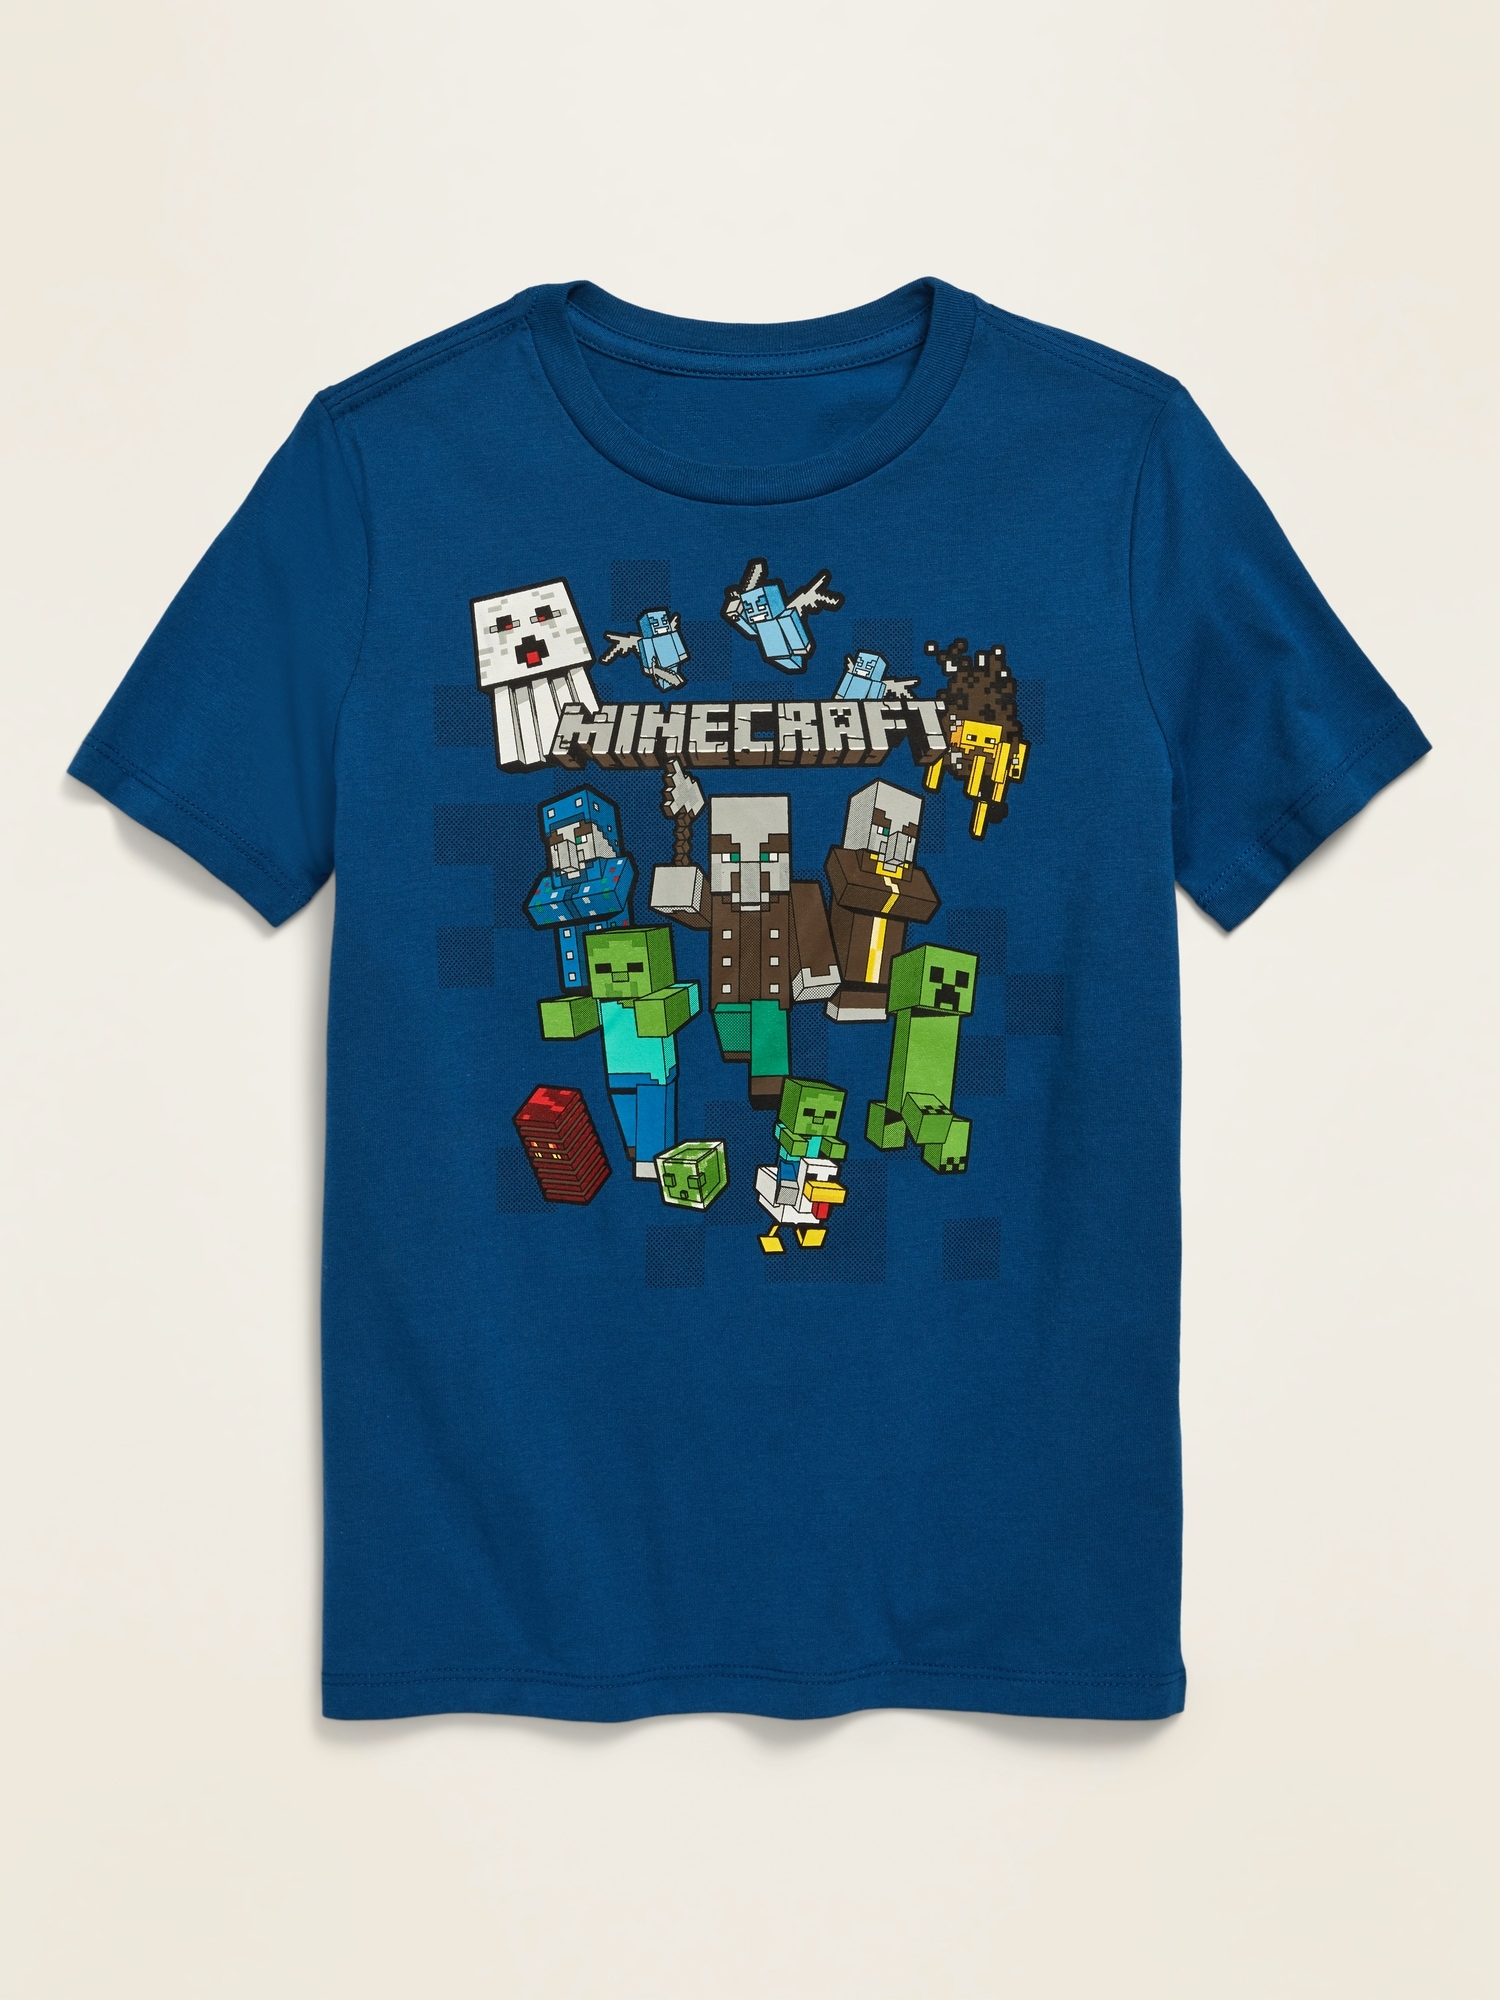 Old Navy Minecraft Tee Shirt Boys Blue Graphic Short Sleeve